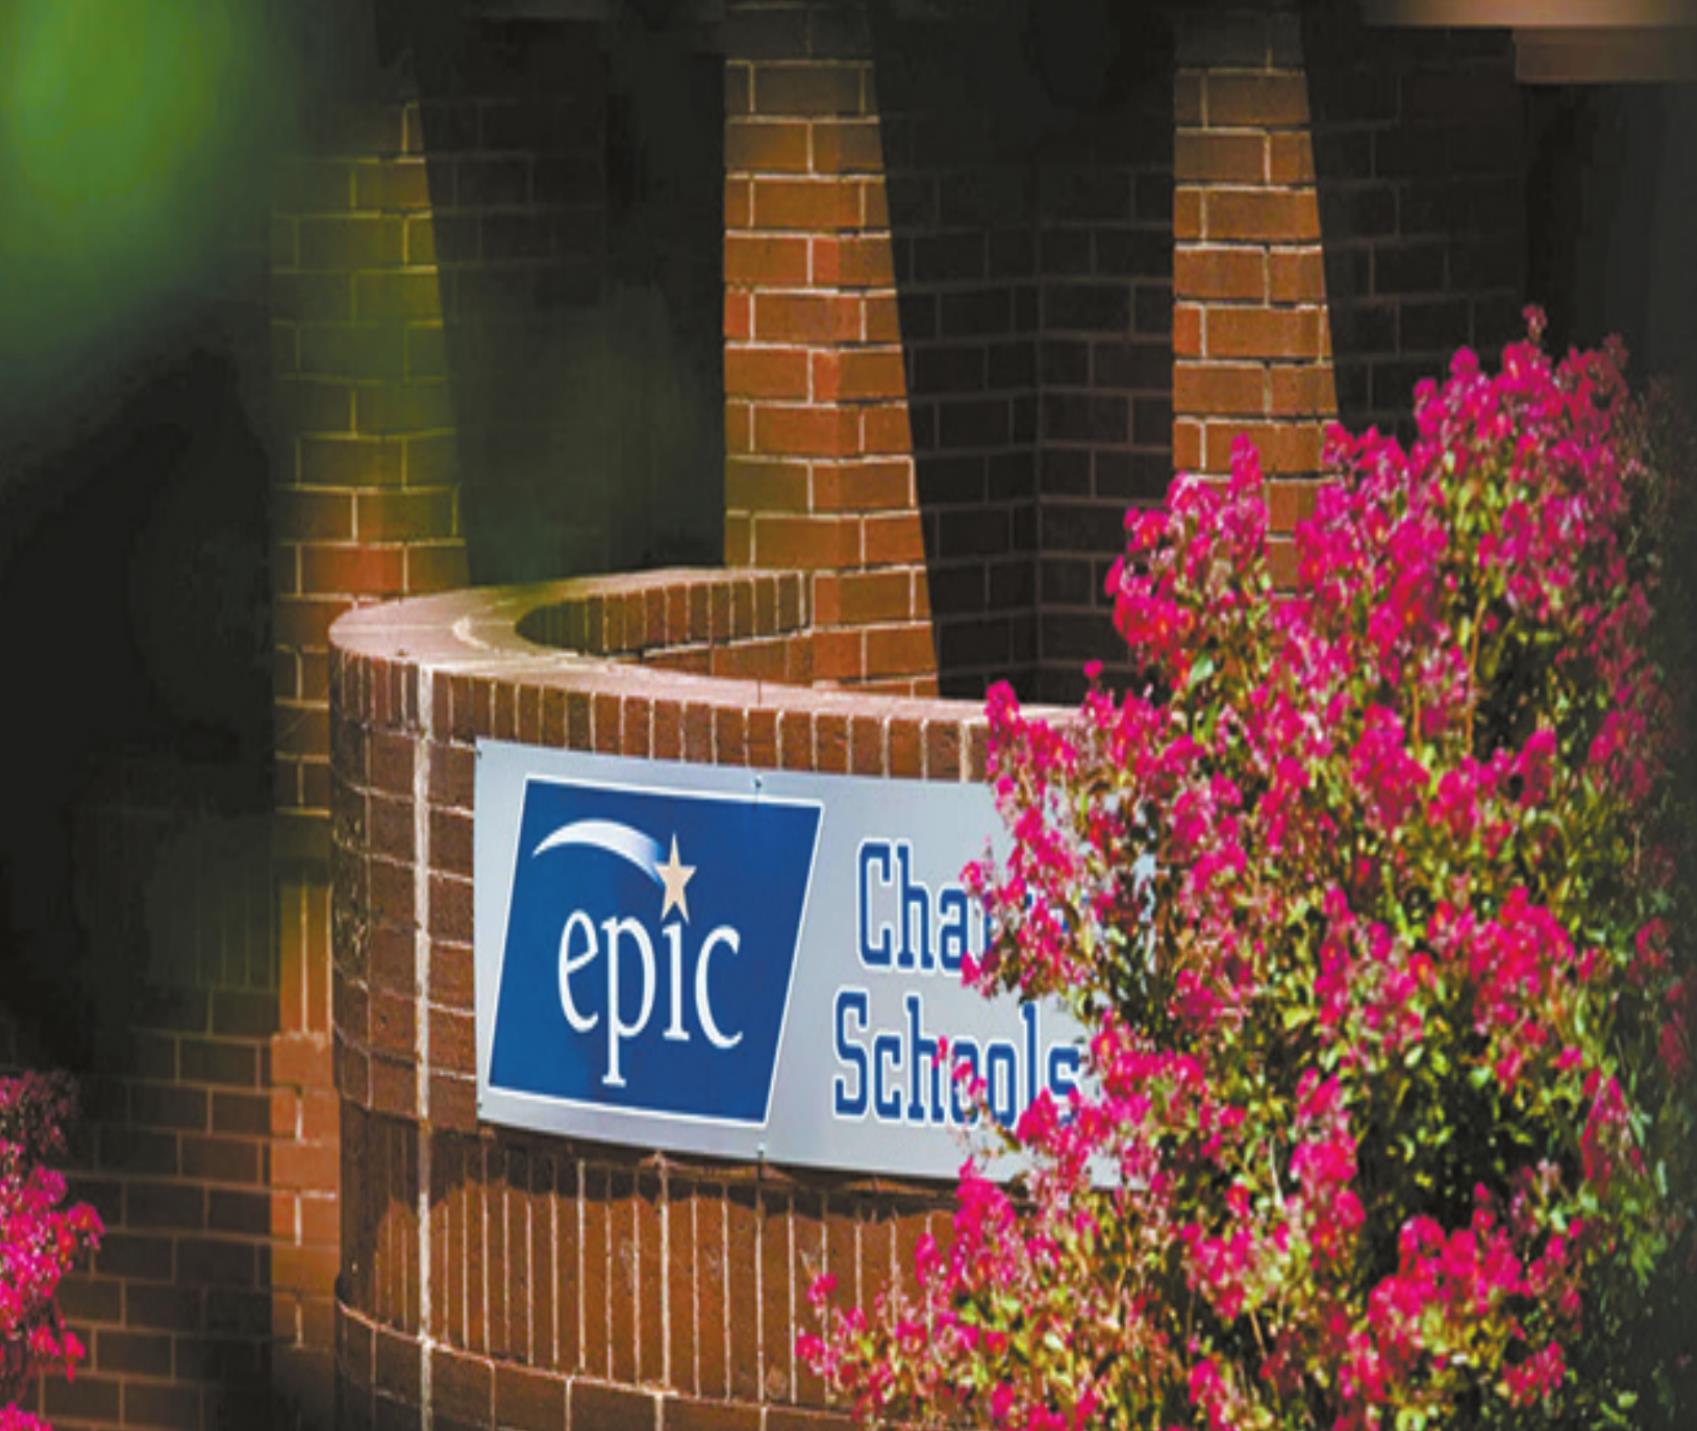 epic charter school start date